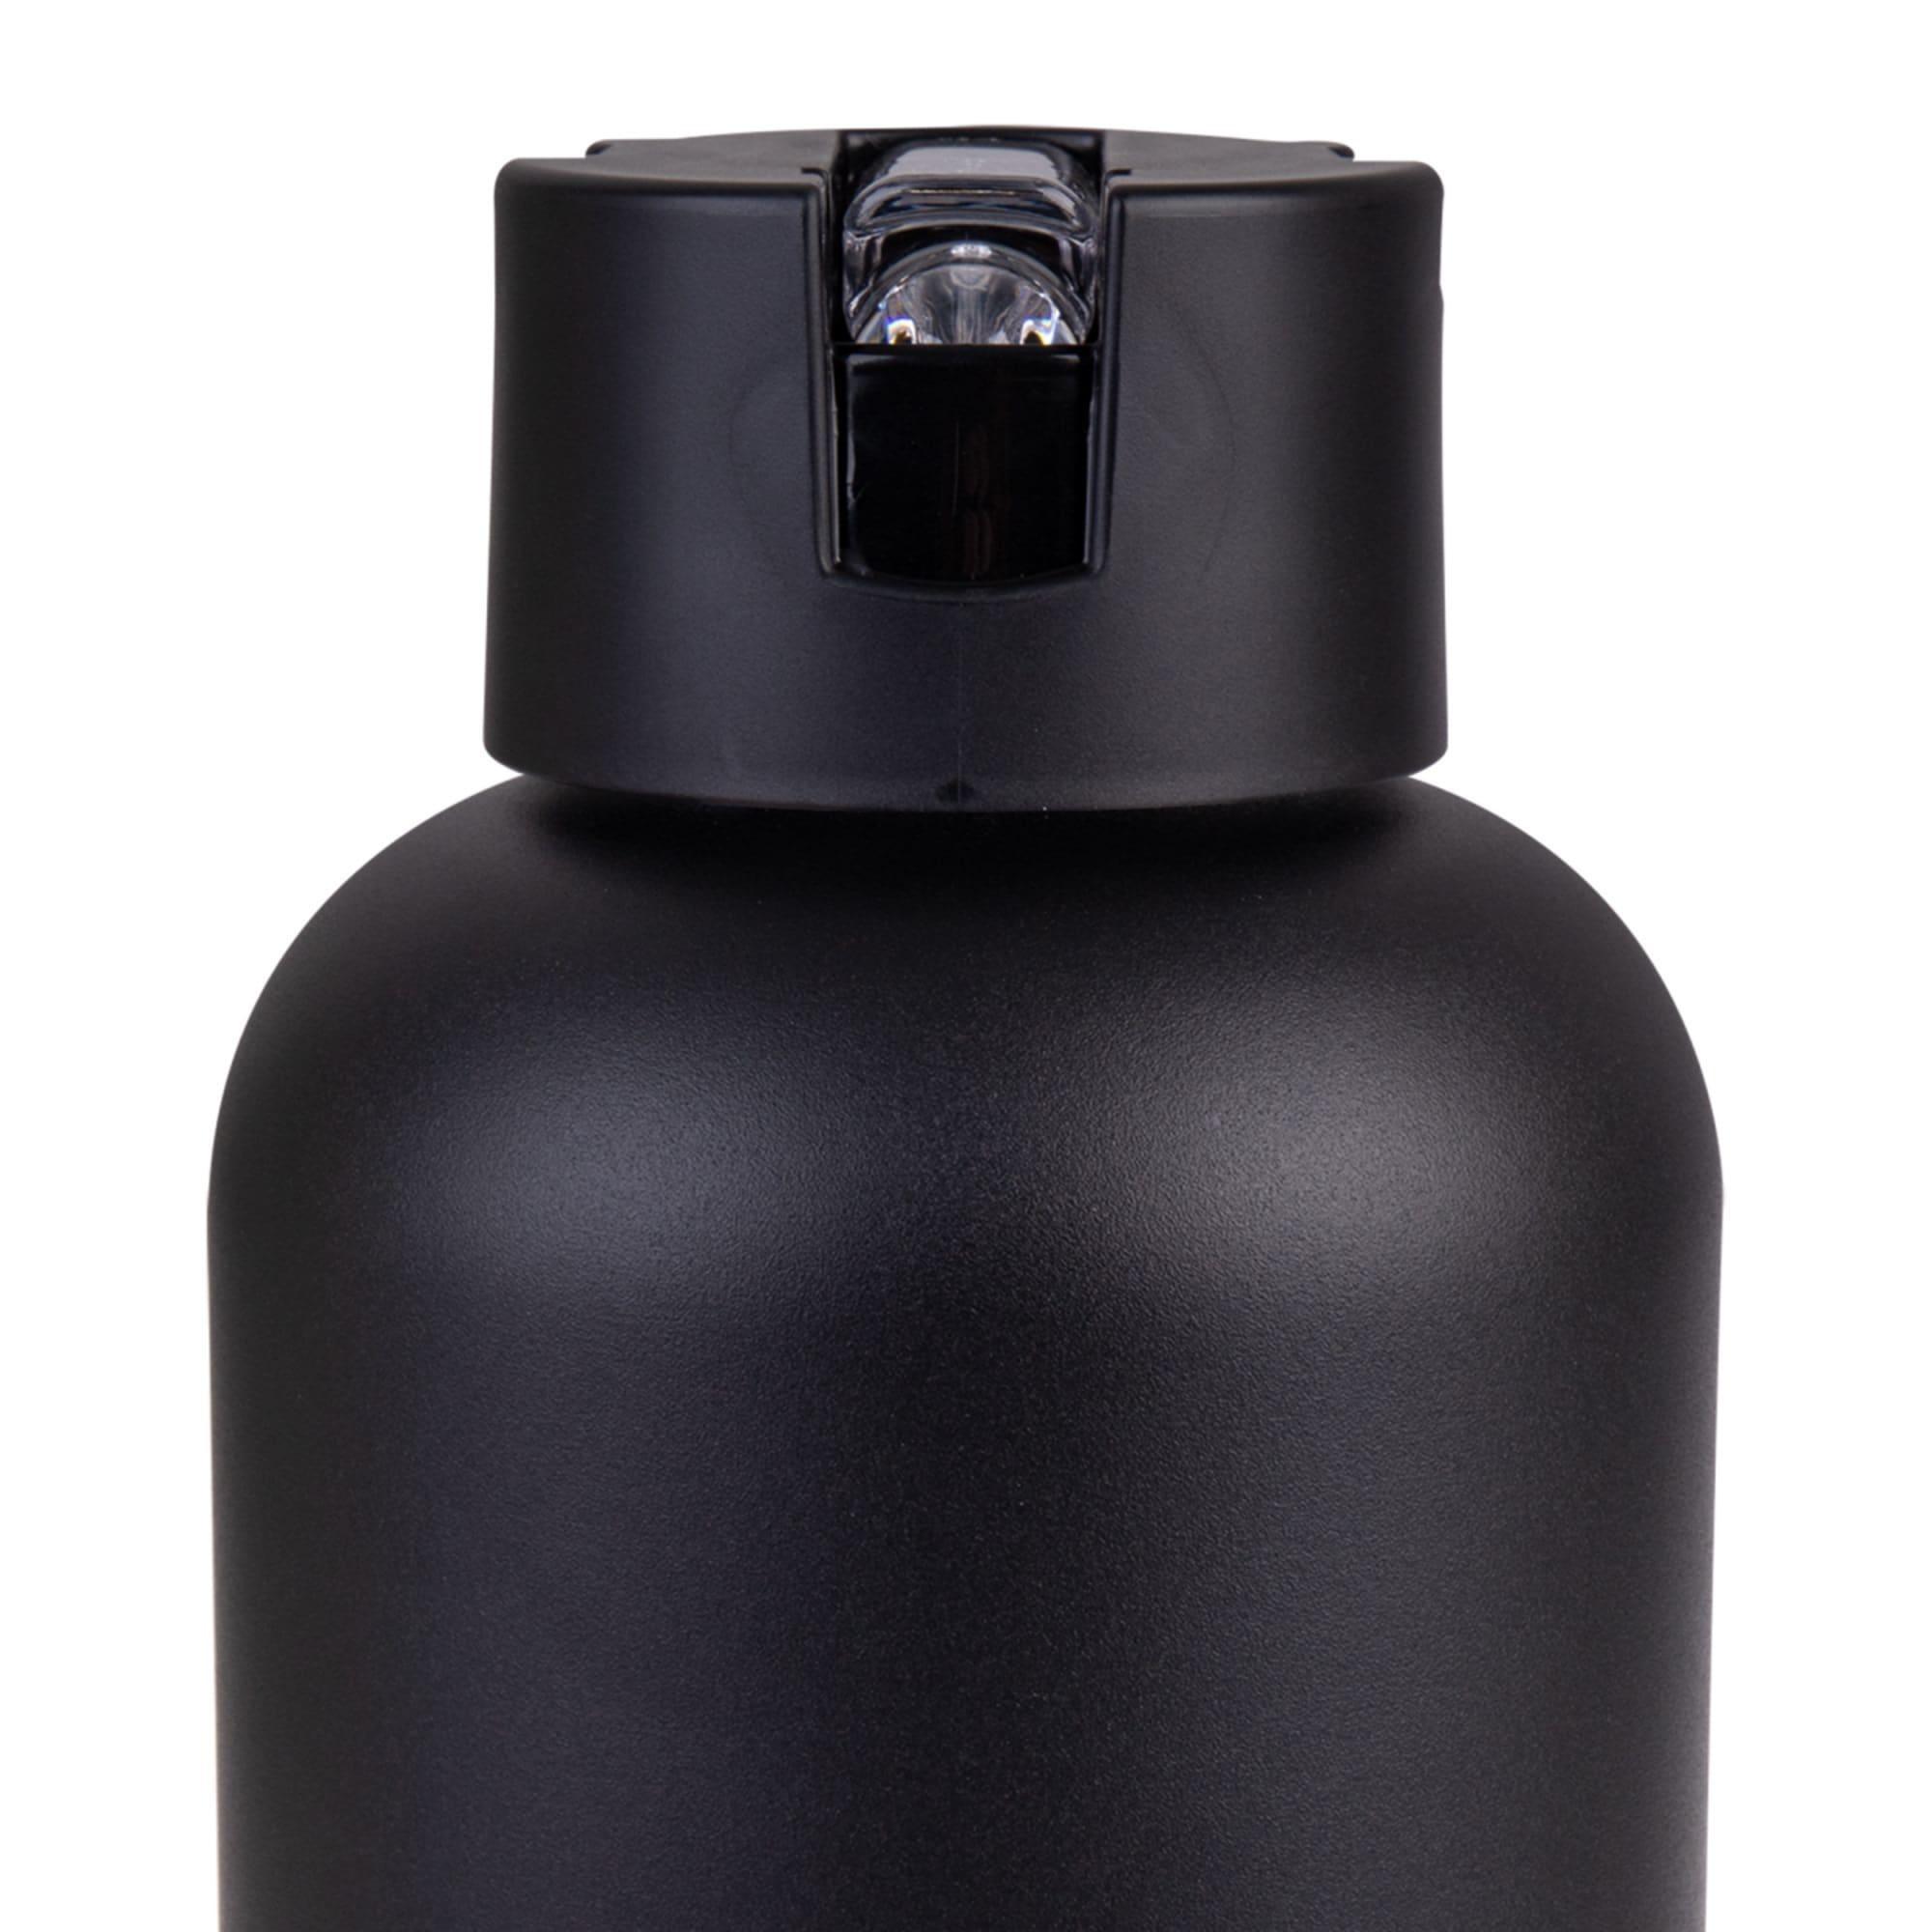 Oasis Moda Triple Wall Insulated Drink Bottle 1.5L Black Image 8